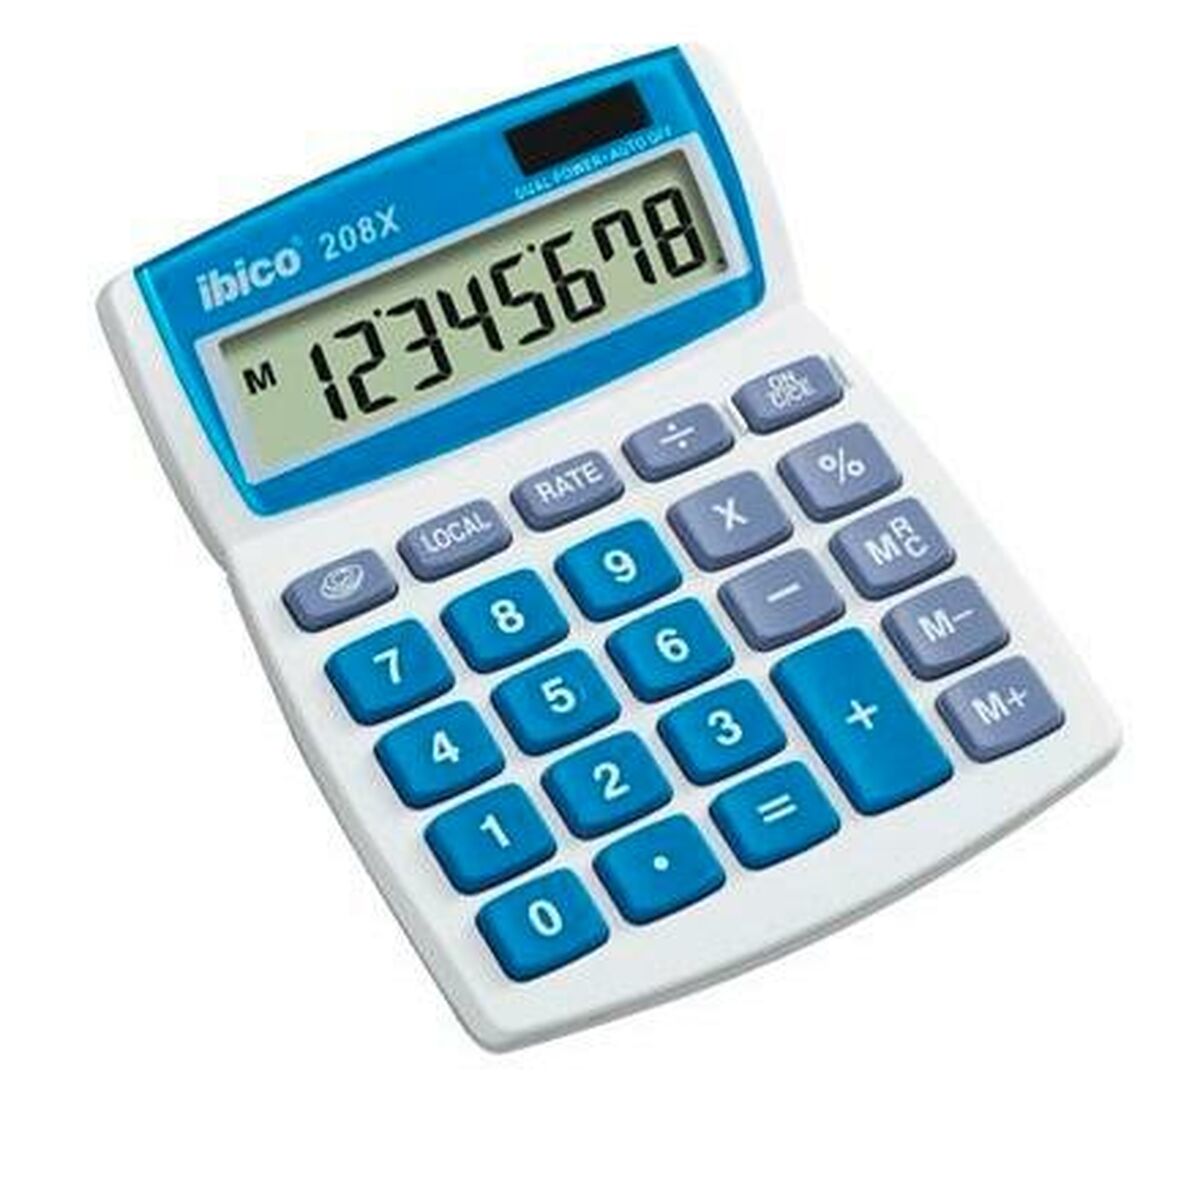 Calculator Ibico 208X Alb